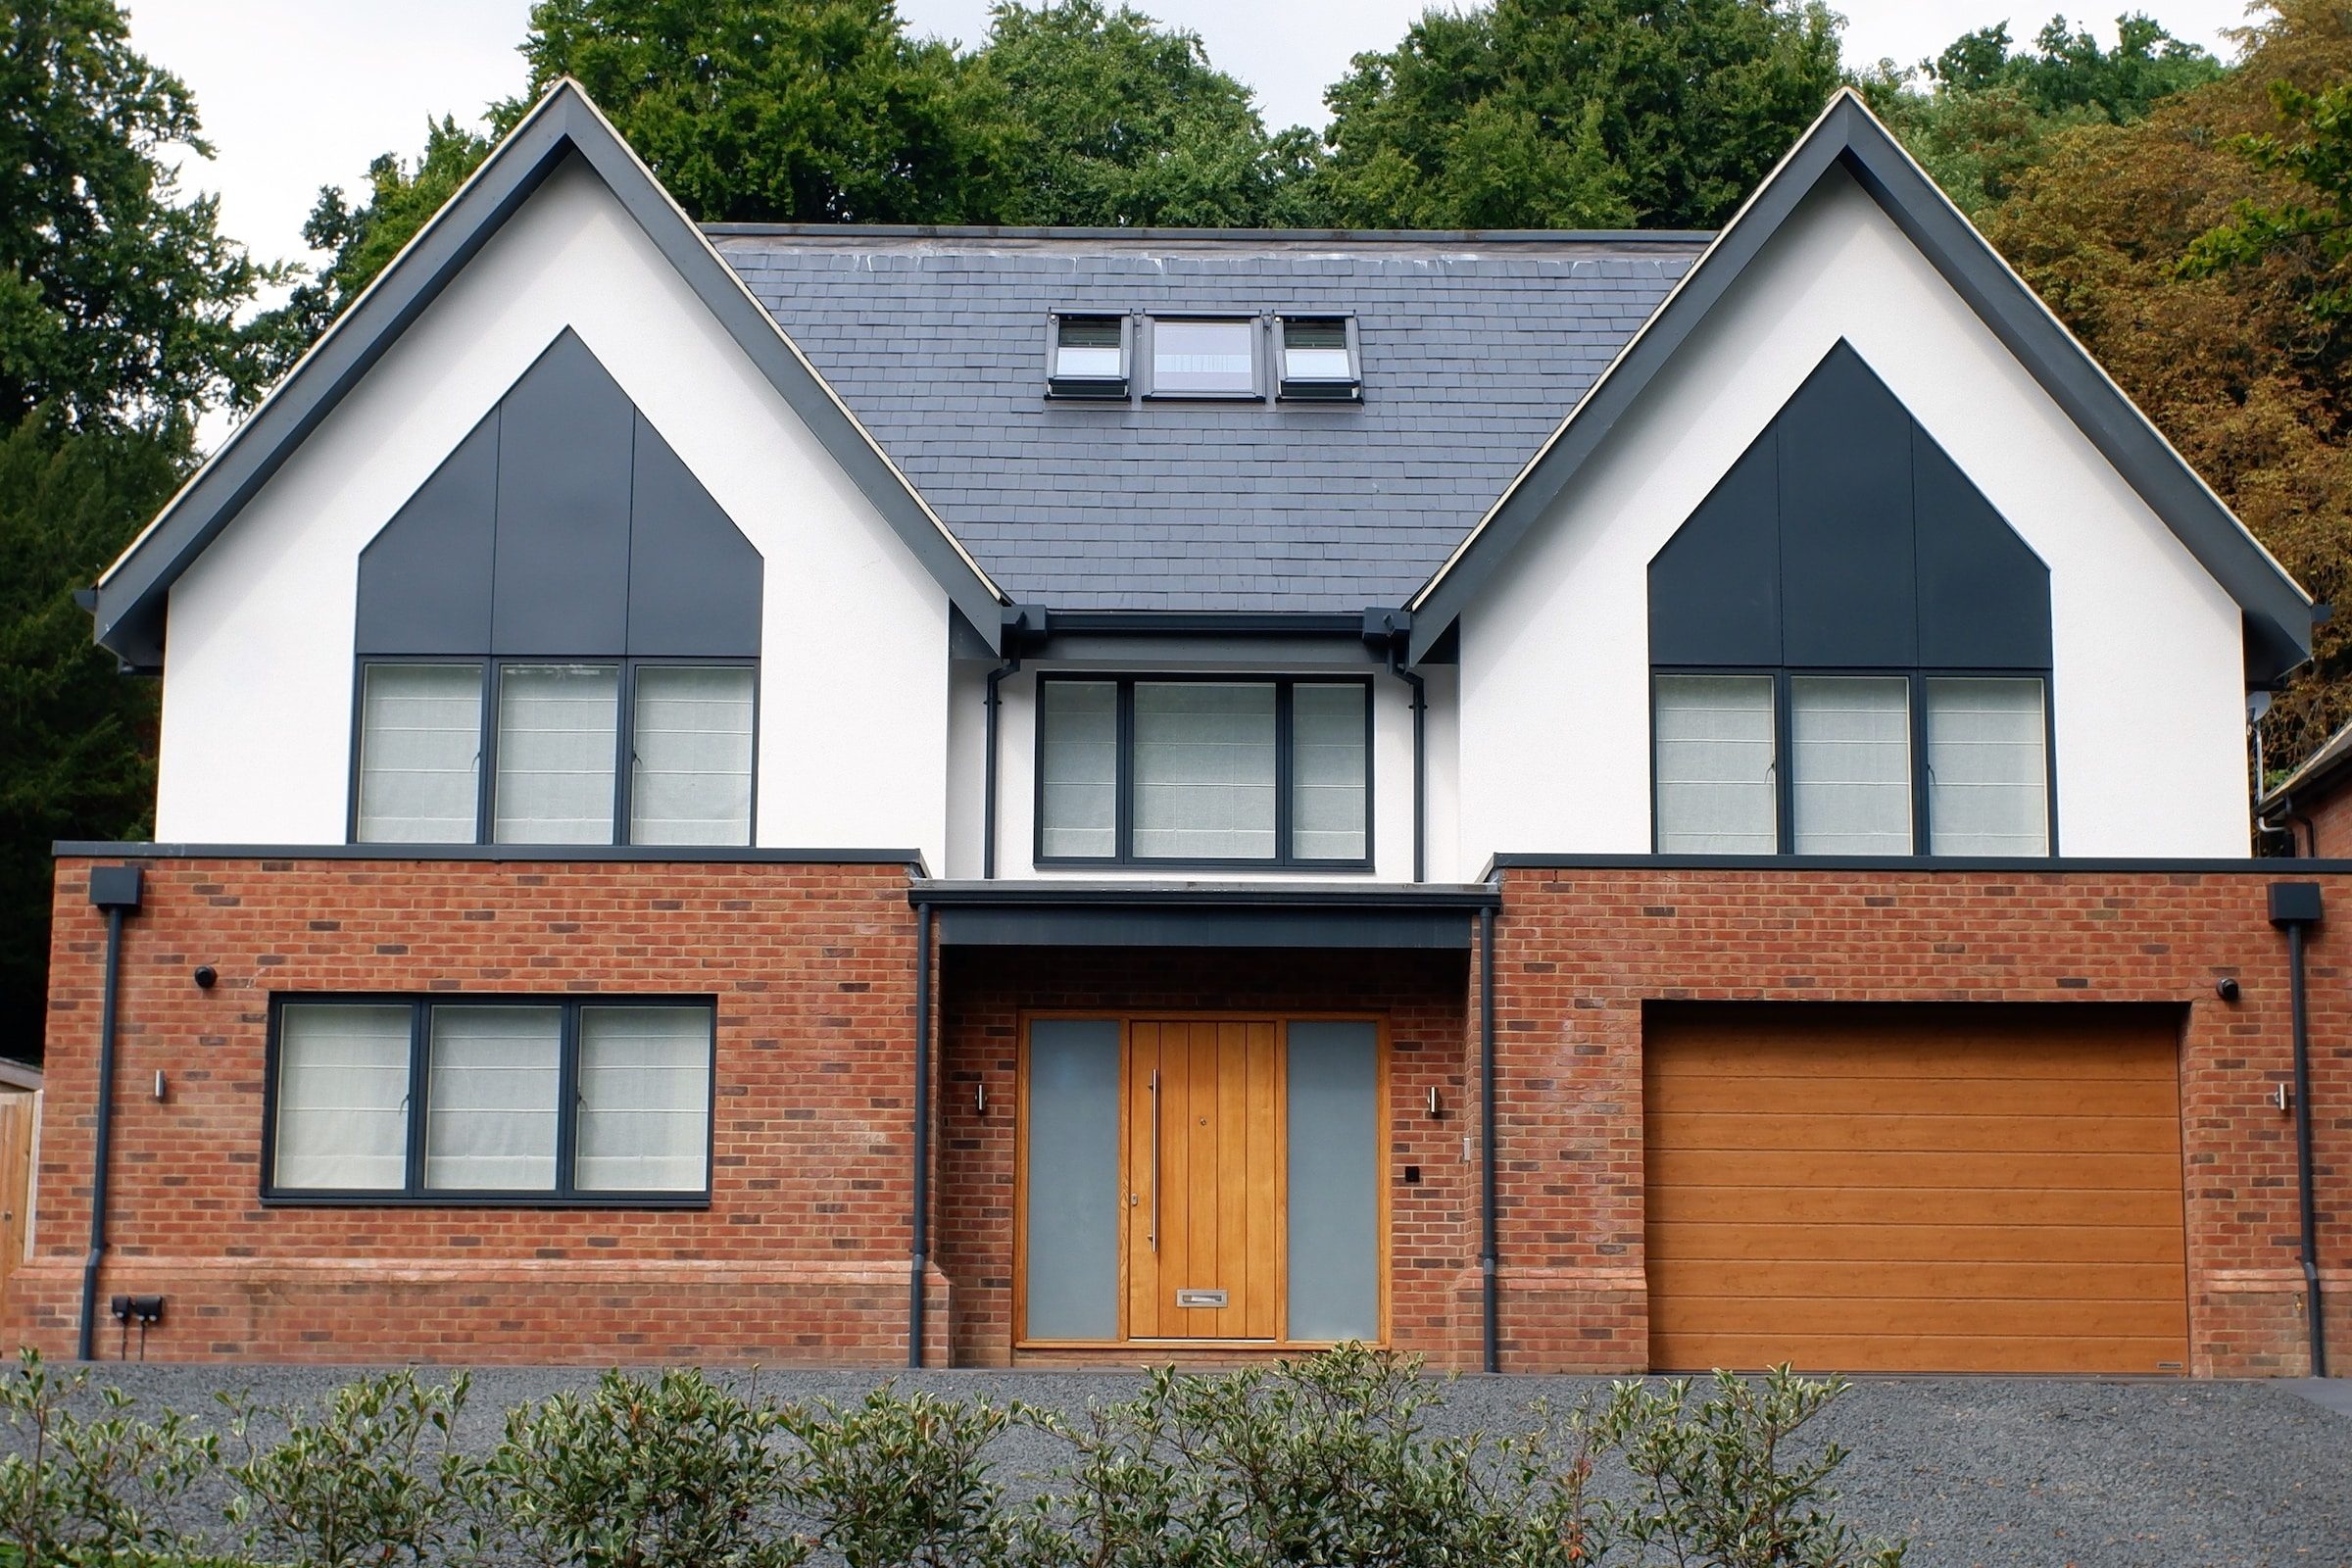 Luxury detached dwelling with grey aluminium windows